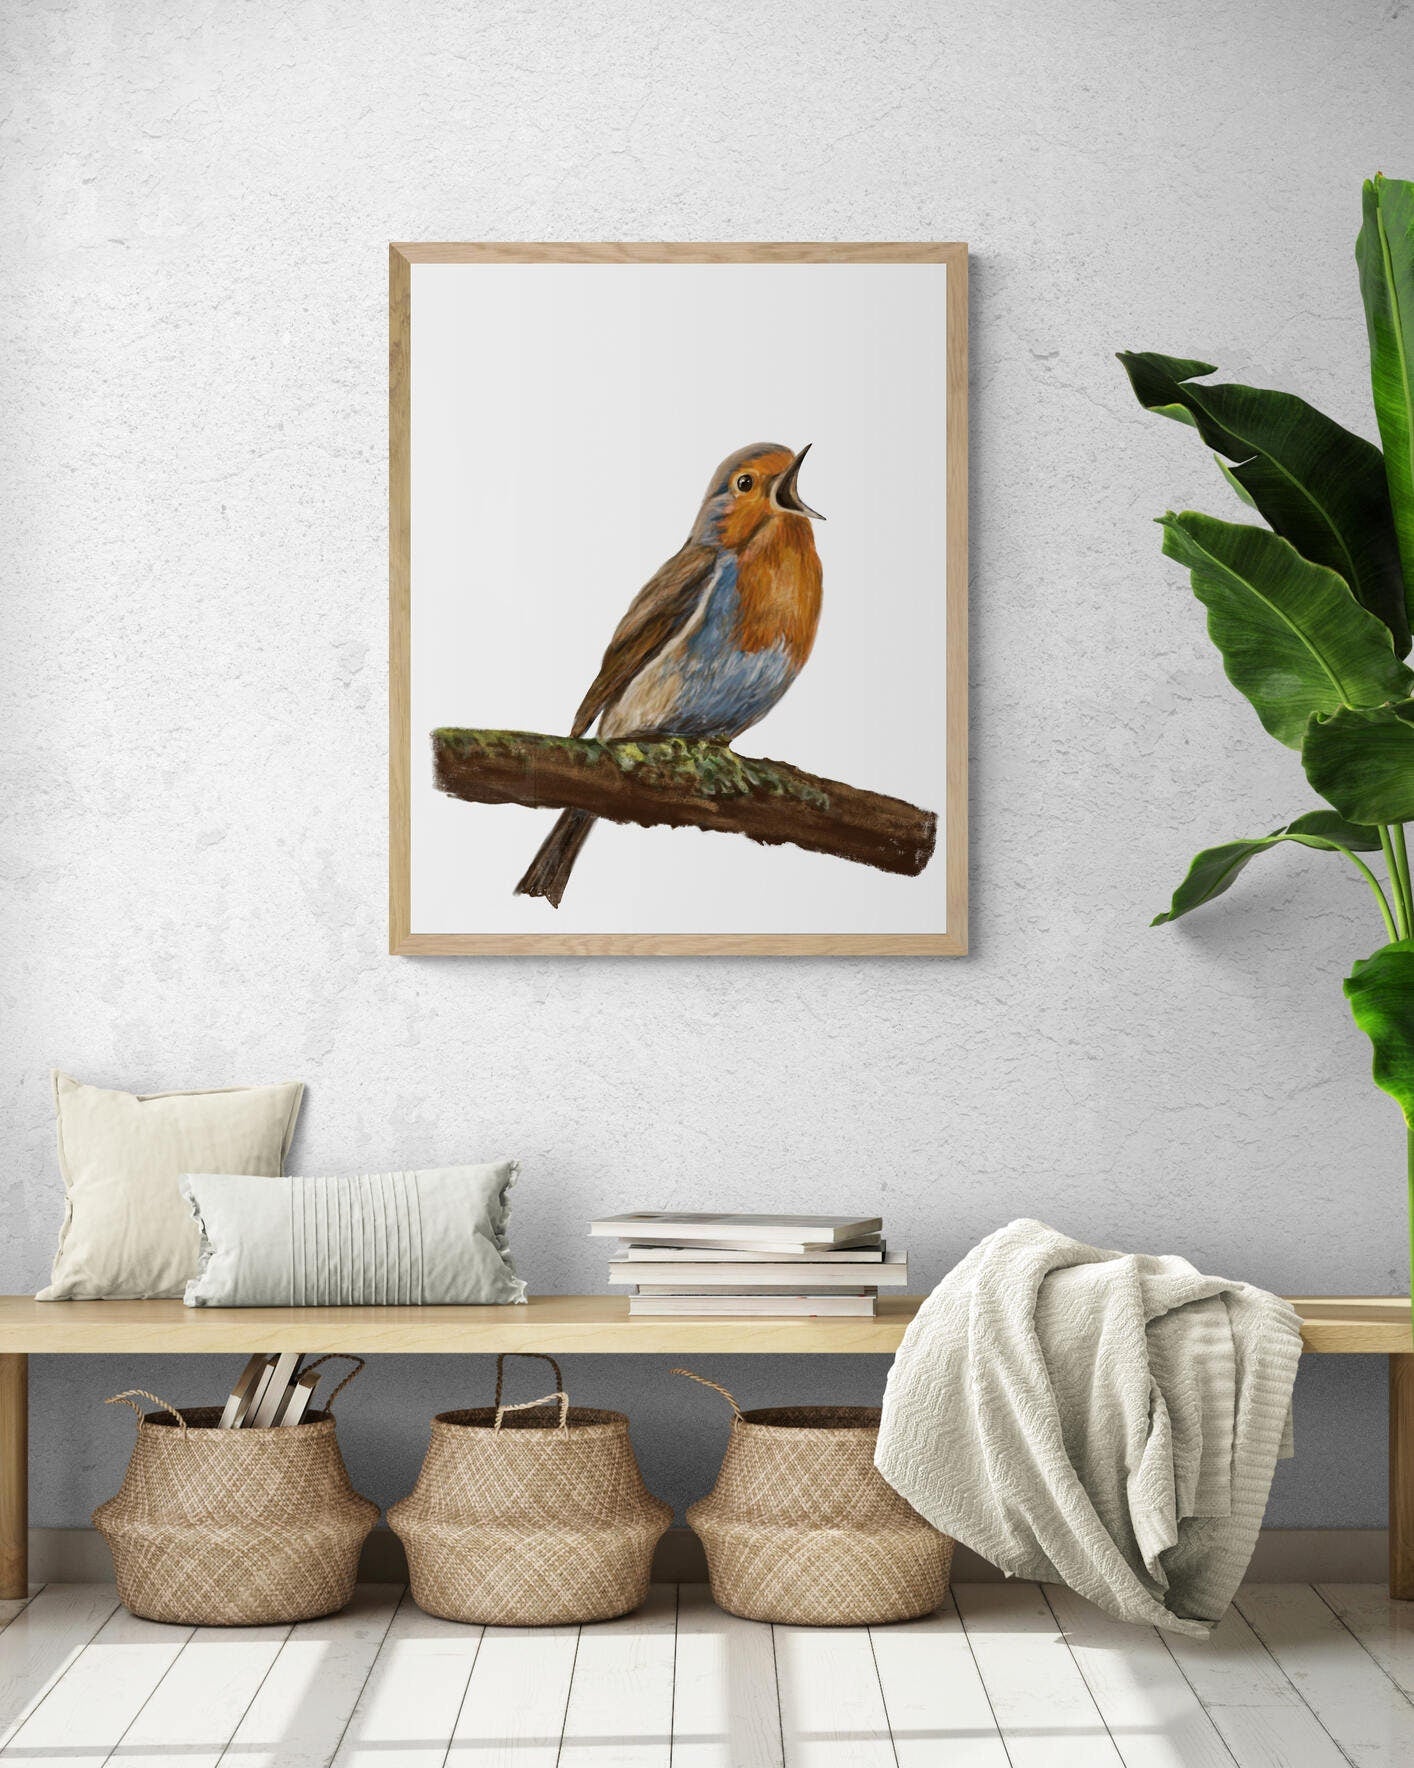 Singing Robin Bird Print, Robin Bird Painting, Red Bellied Bird Print, Robin Holiday Print, Living Room Wall Art, Bird Print Gift, Mom Gift